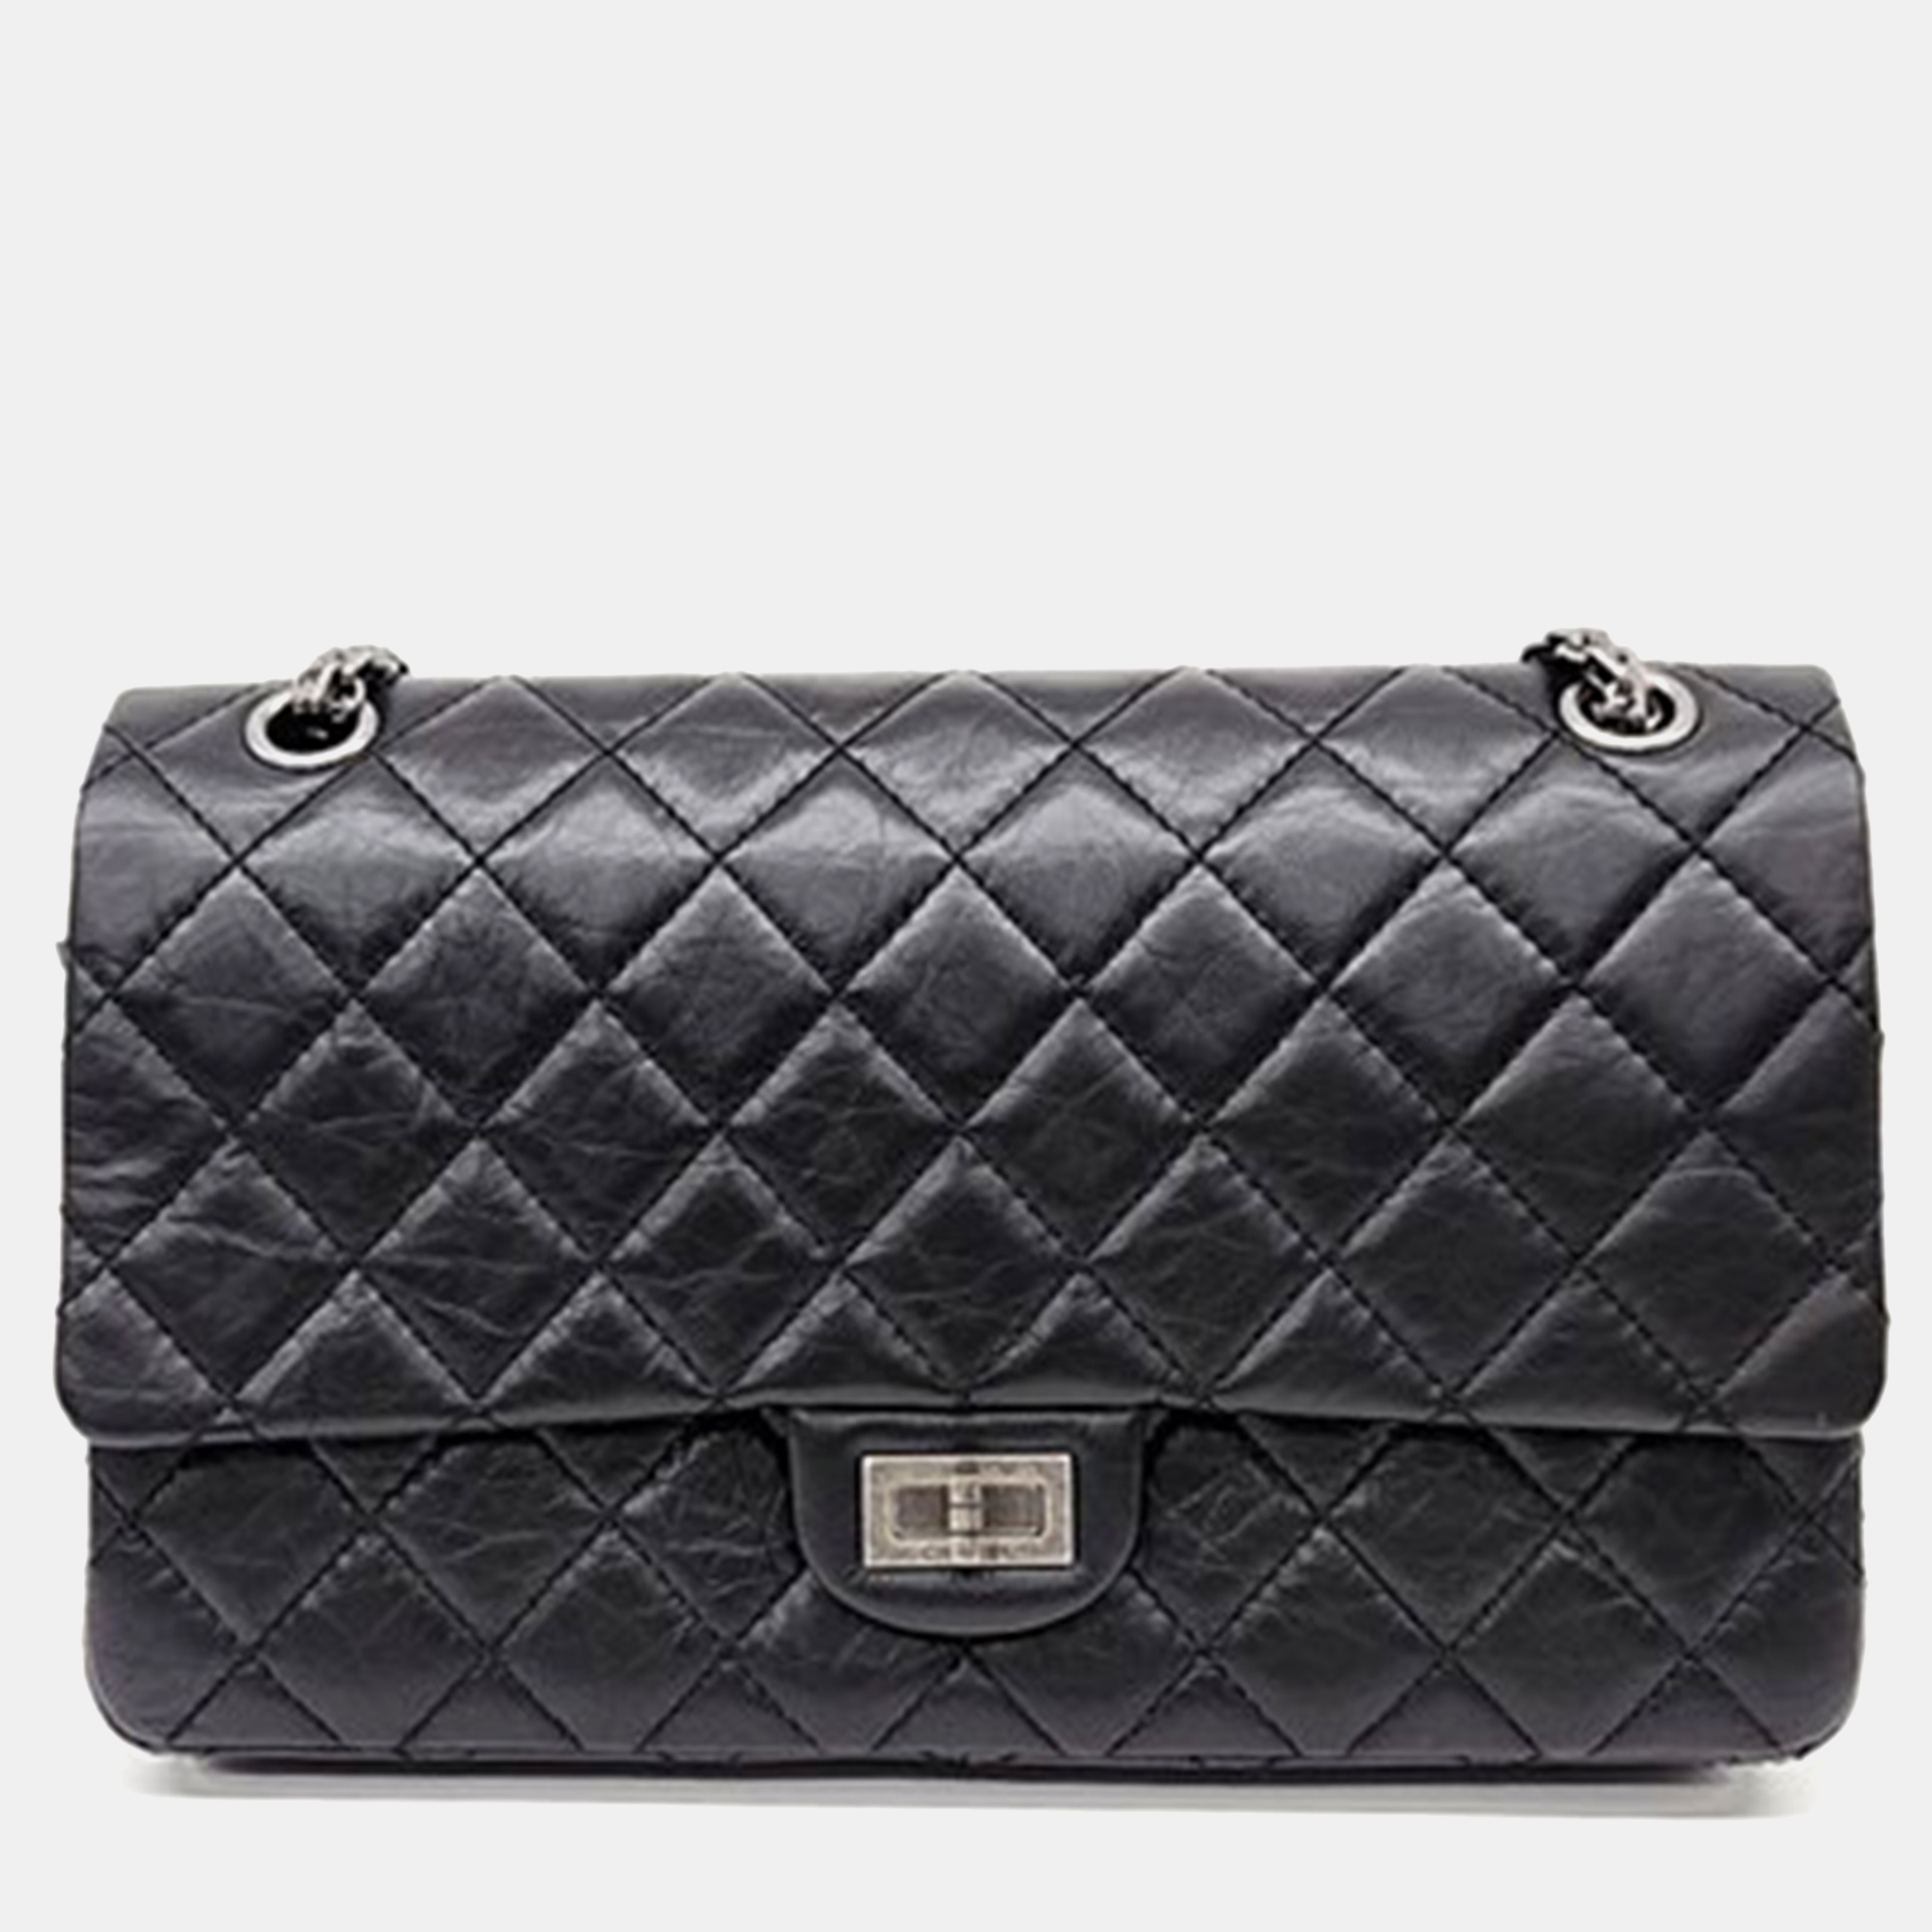 Chanel Vintage 2.55 Medium Bag